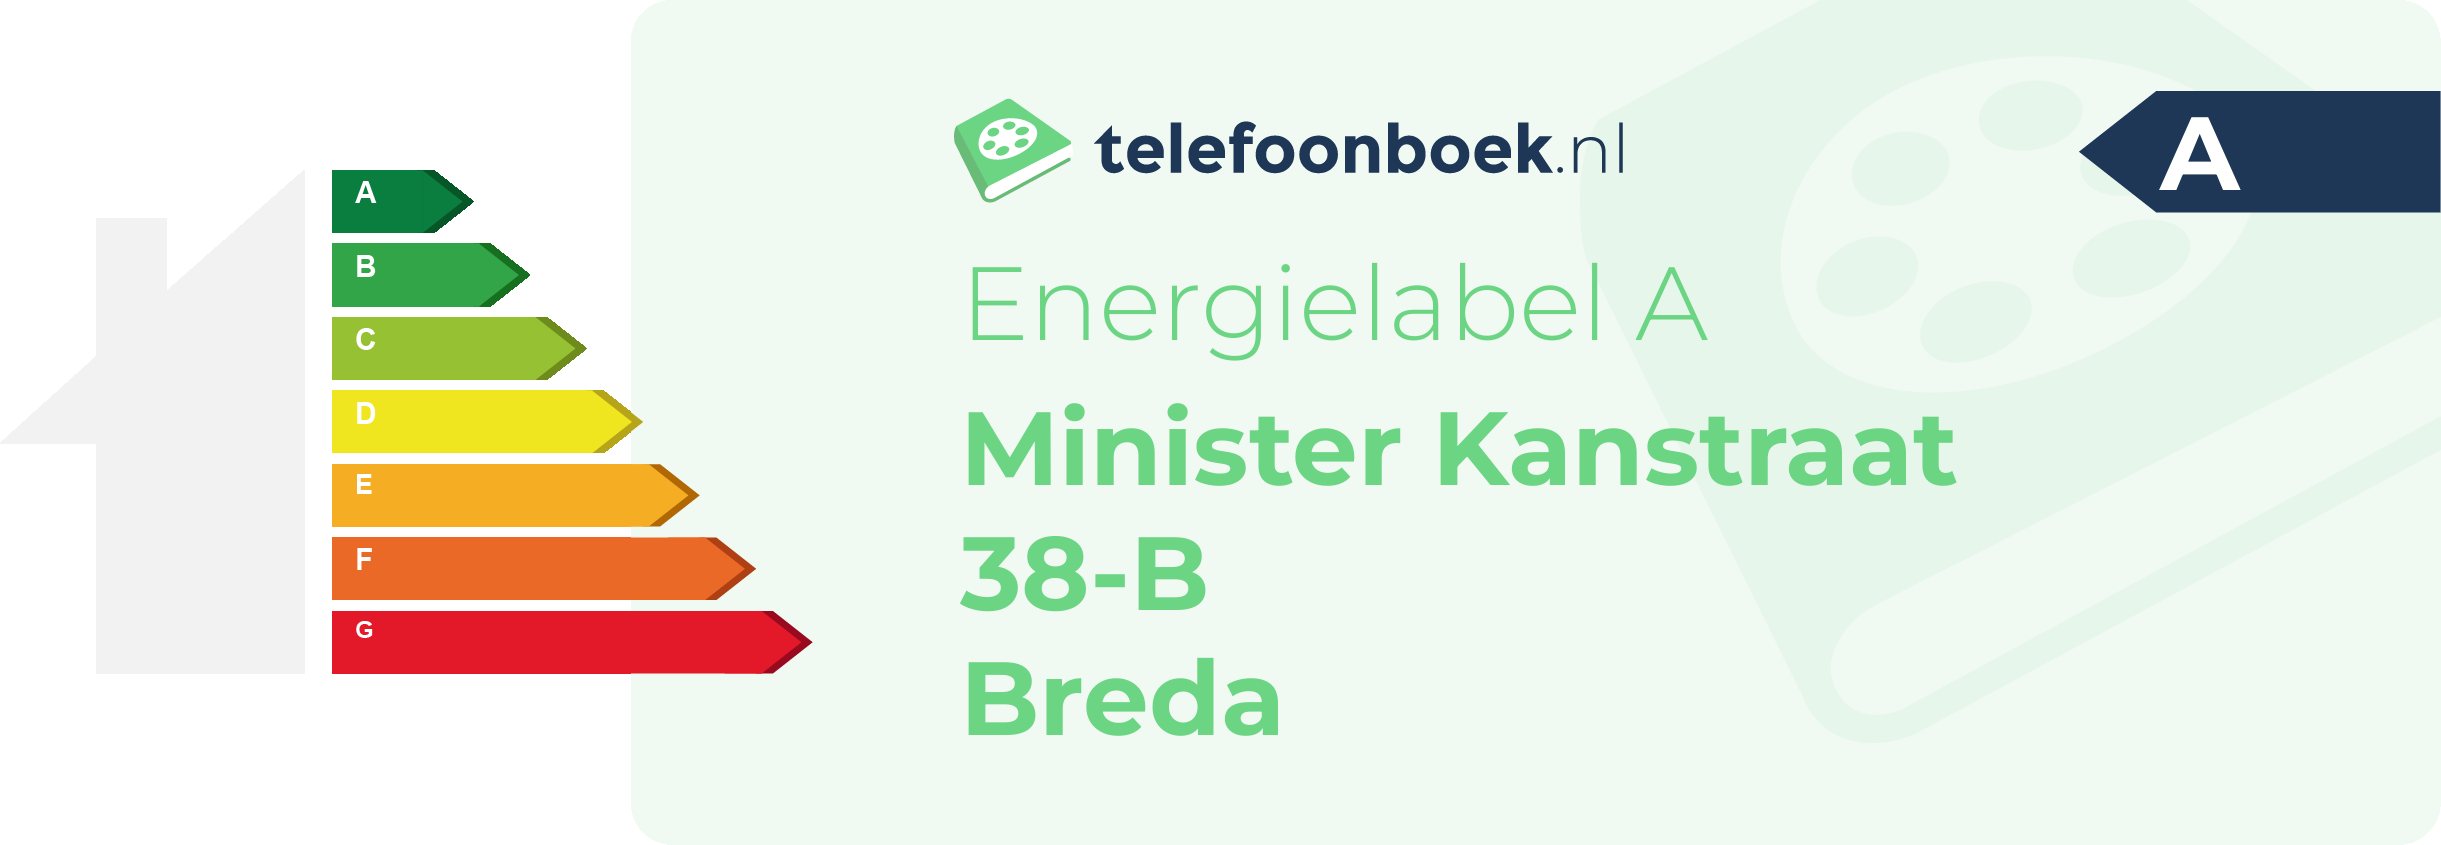 Energielabel Minister Kanstraat 38-B Breda